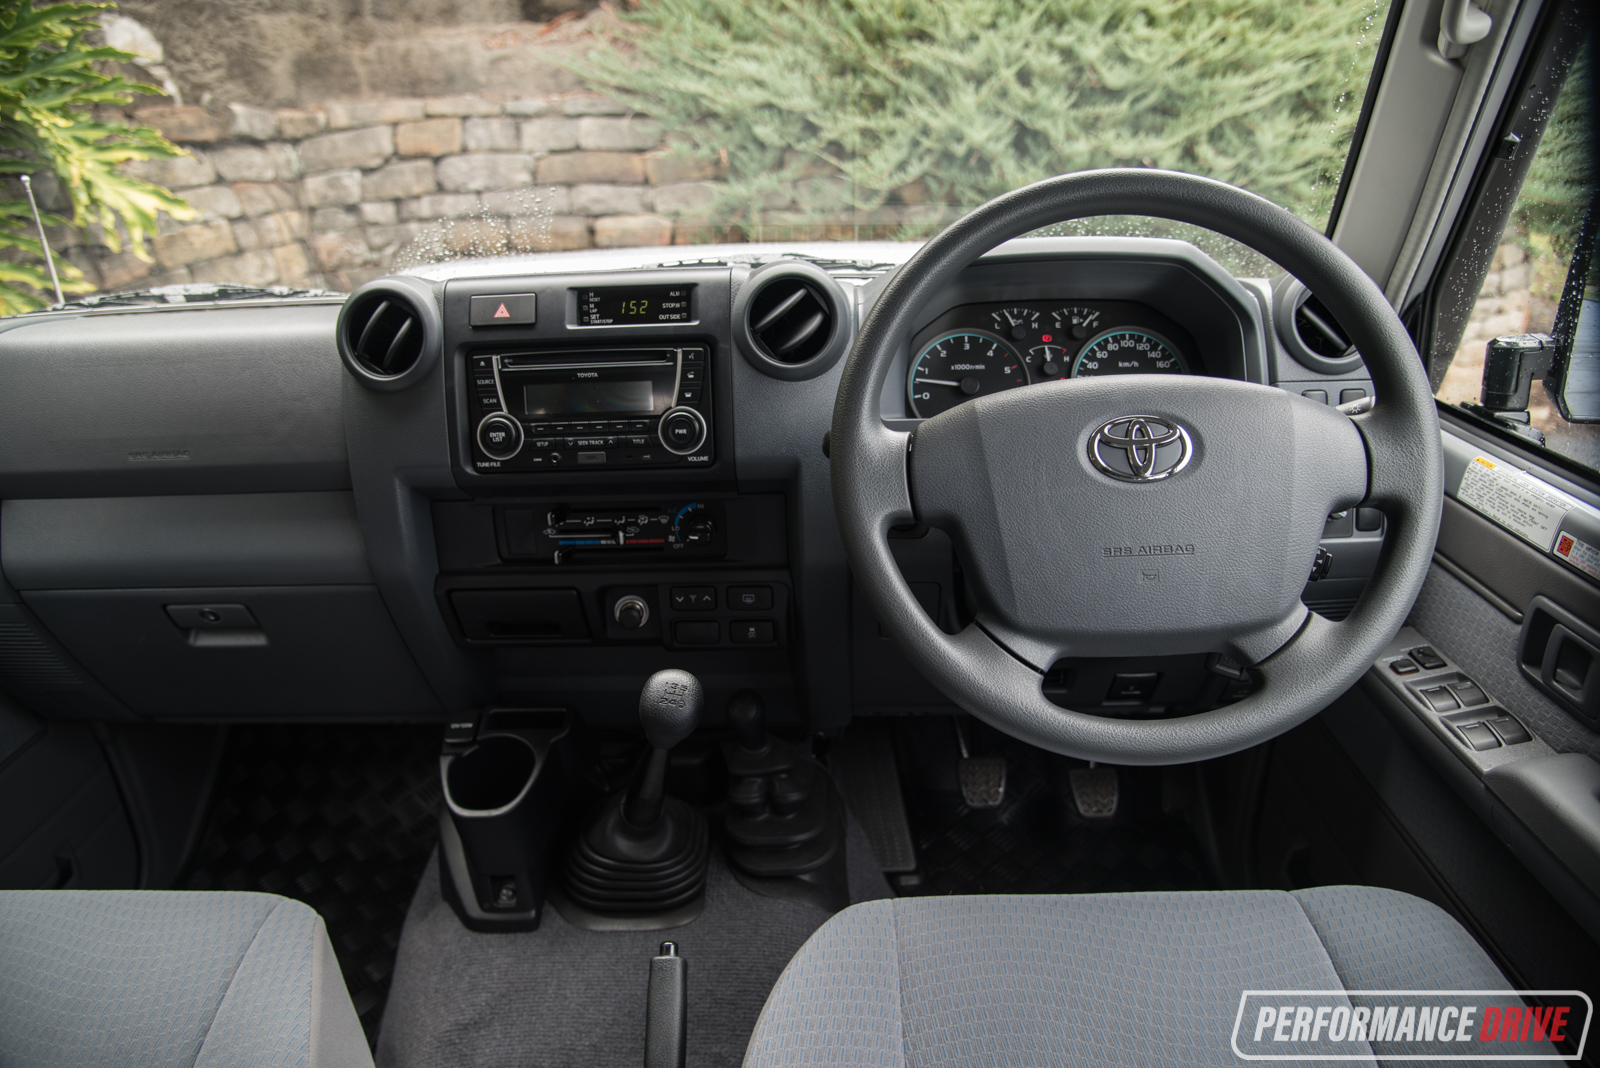 2017 Toyota Landcruiser 70 Series Gxl Wagon Review Video